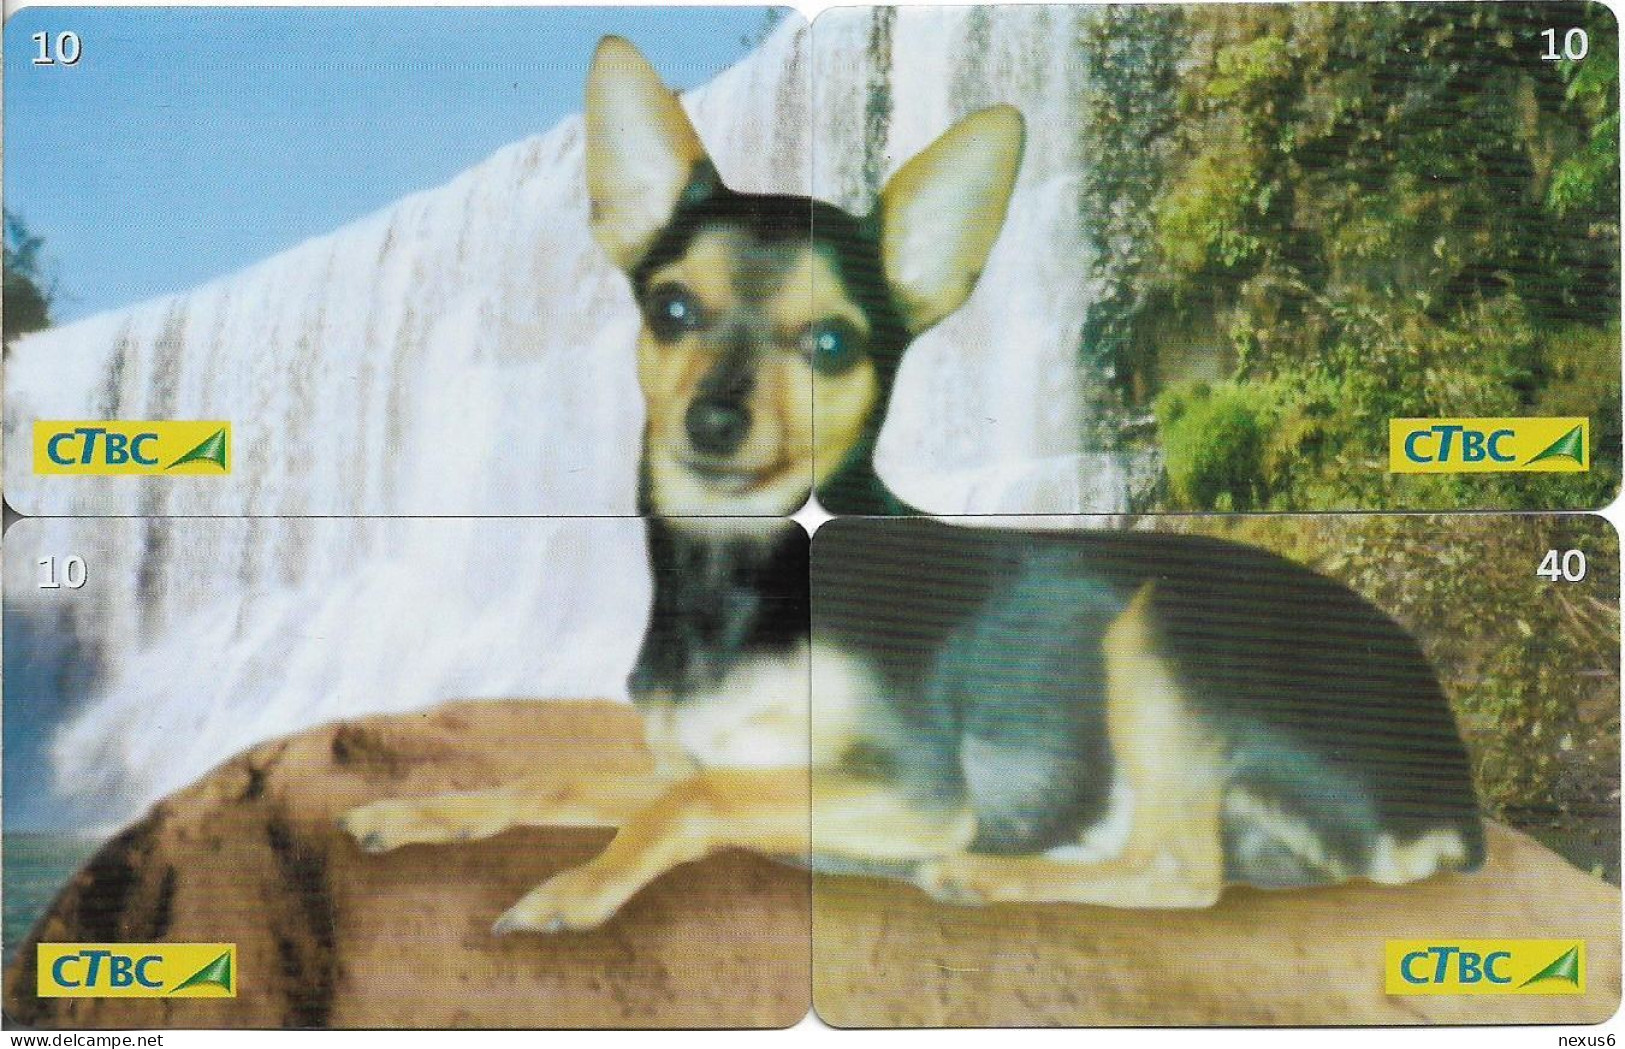 Brazil - CTBC 31 (Inductive) - Pinscher Dog, Puzzle Set Of 4 Cards, 10.2001, 10U, 10.000ex, Used - Brazil